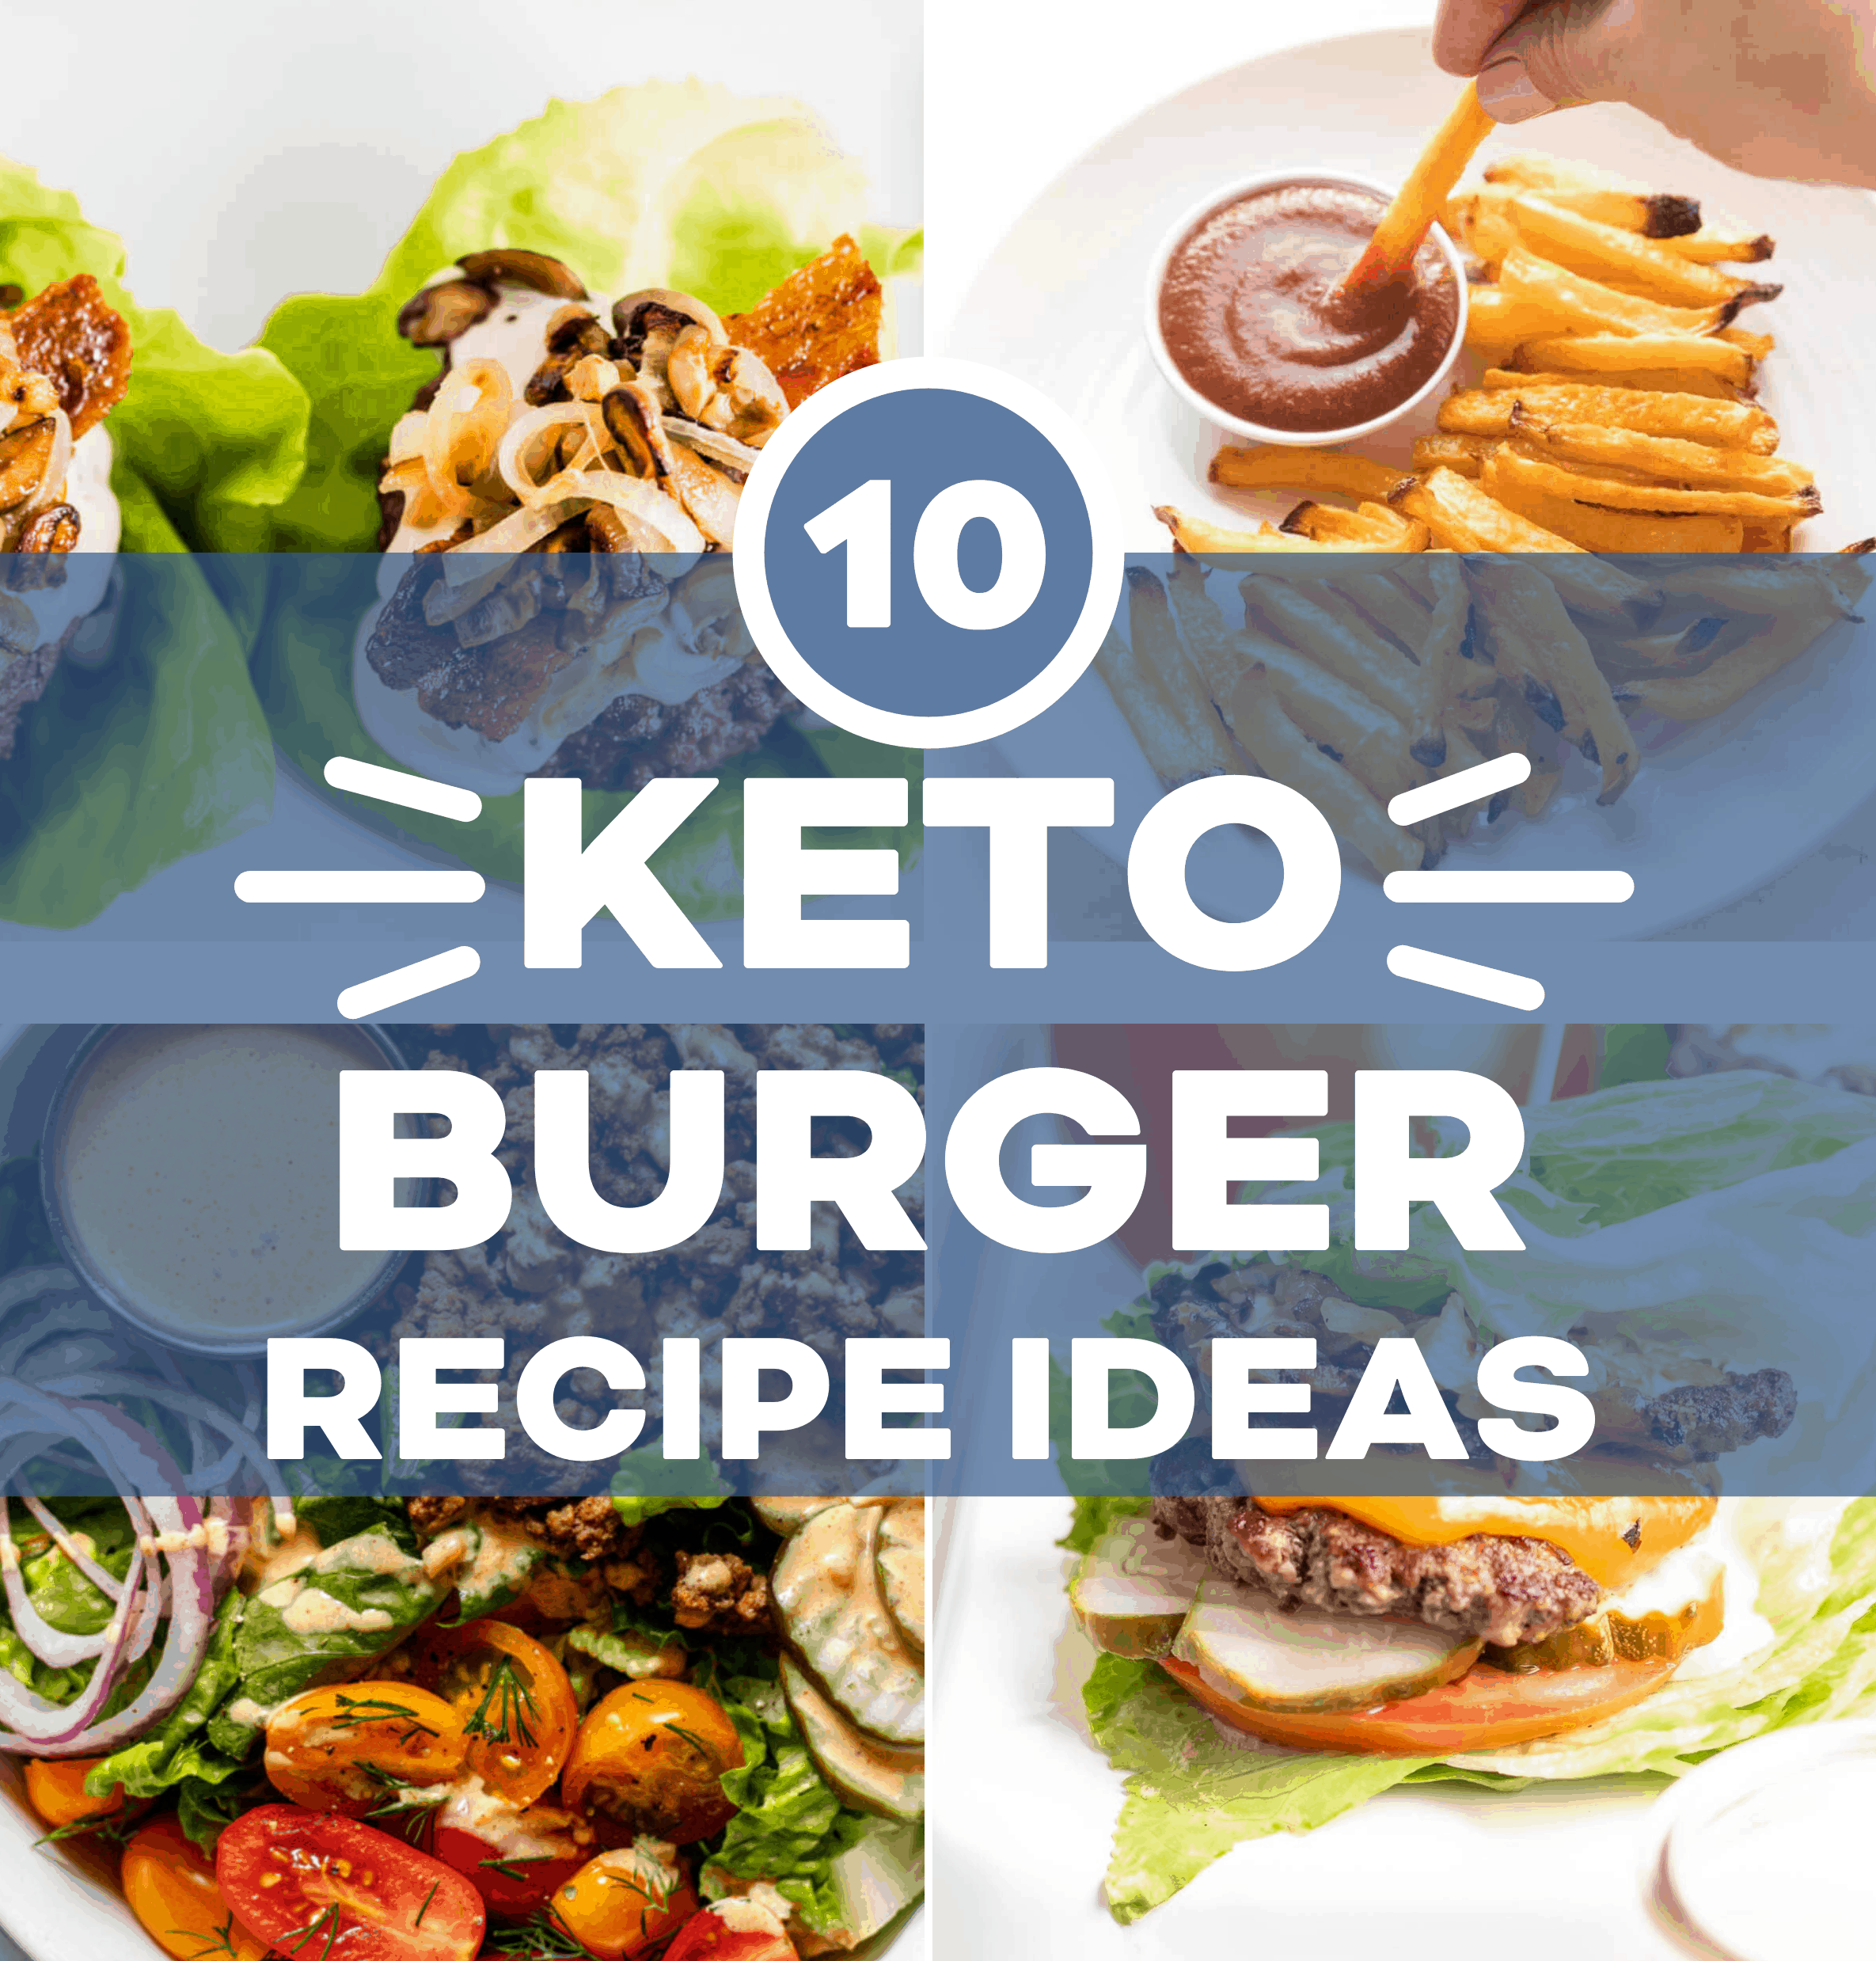 10 Keto Burger Recipe Ideas